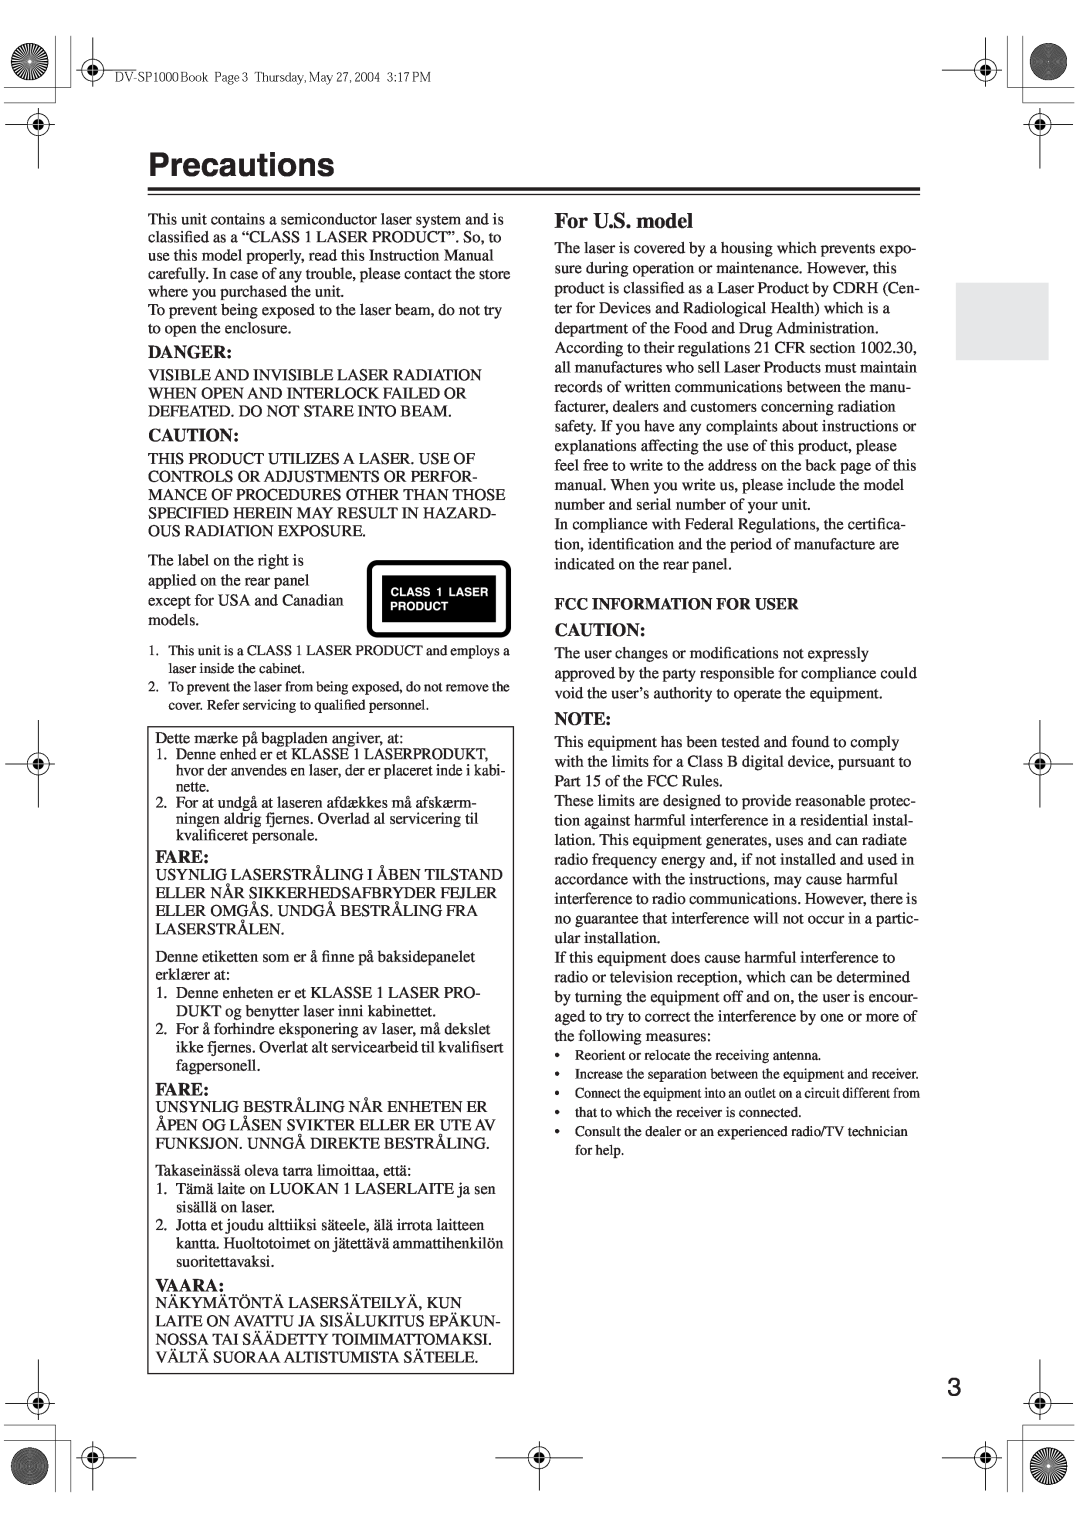 Onkyo DV-SP1000E instruction manual Precautions, For U.S. model, Danger, Fare, Vaara, Fcc Information For User 